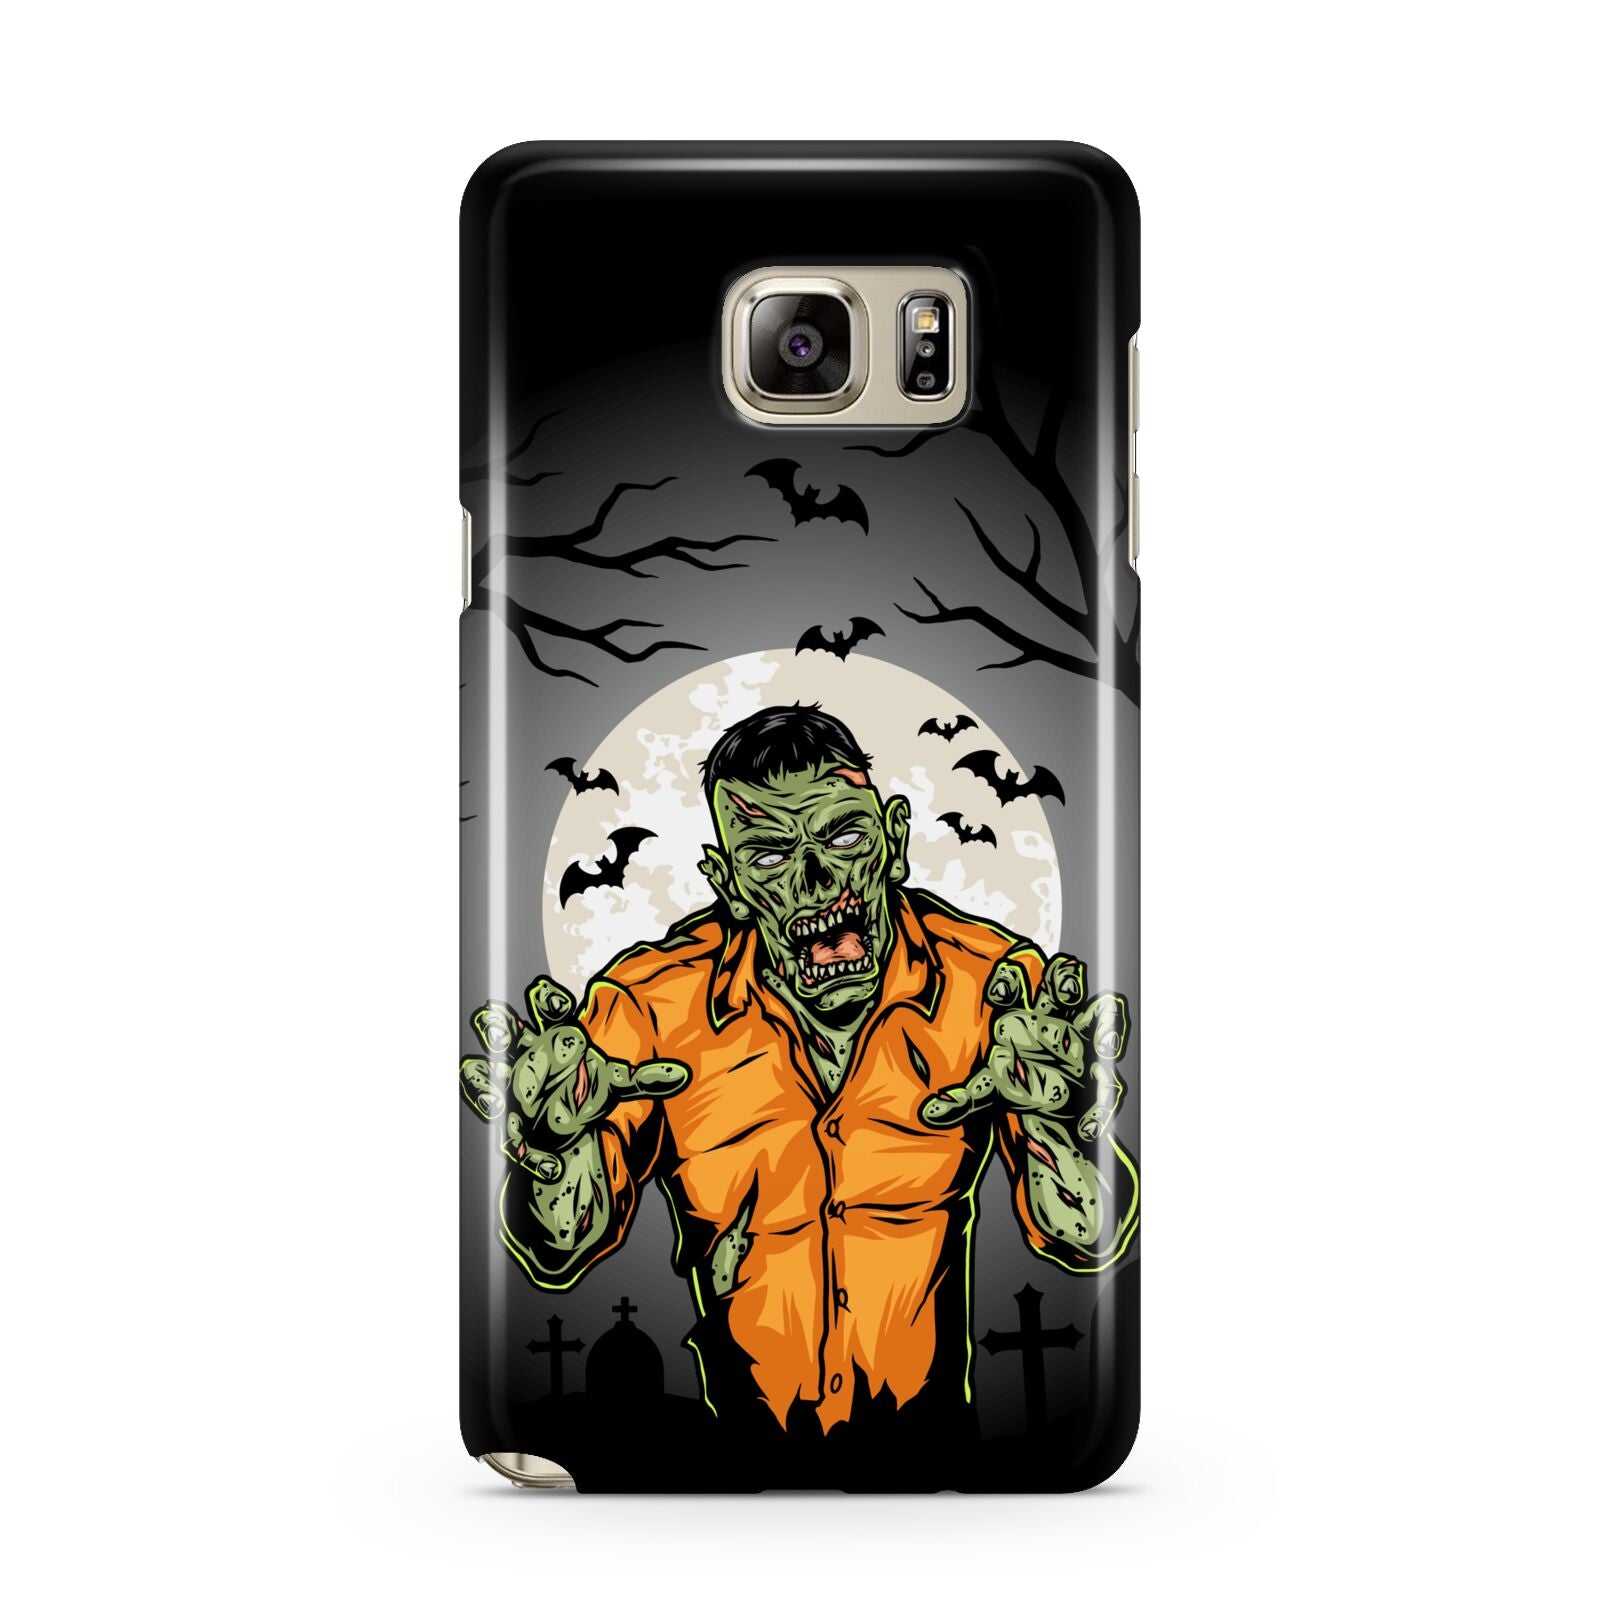 Zombie Night Samsung Galaxy Note 5 Case